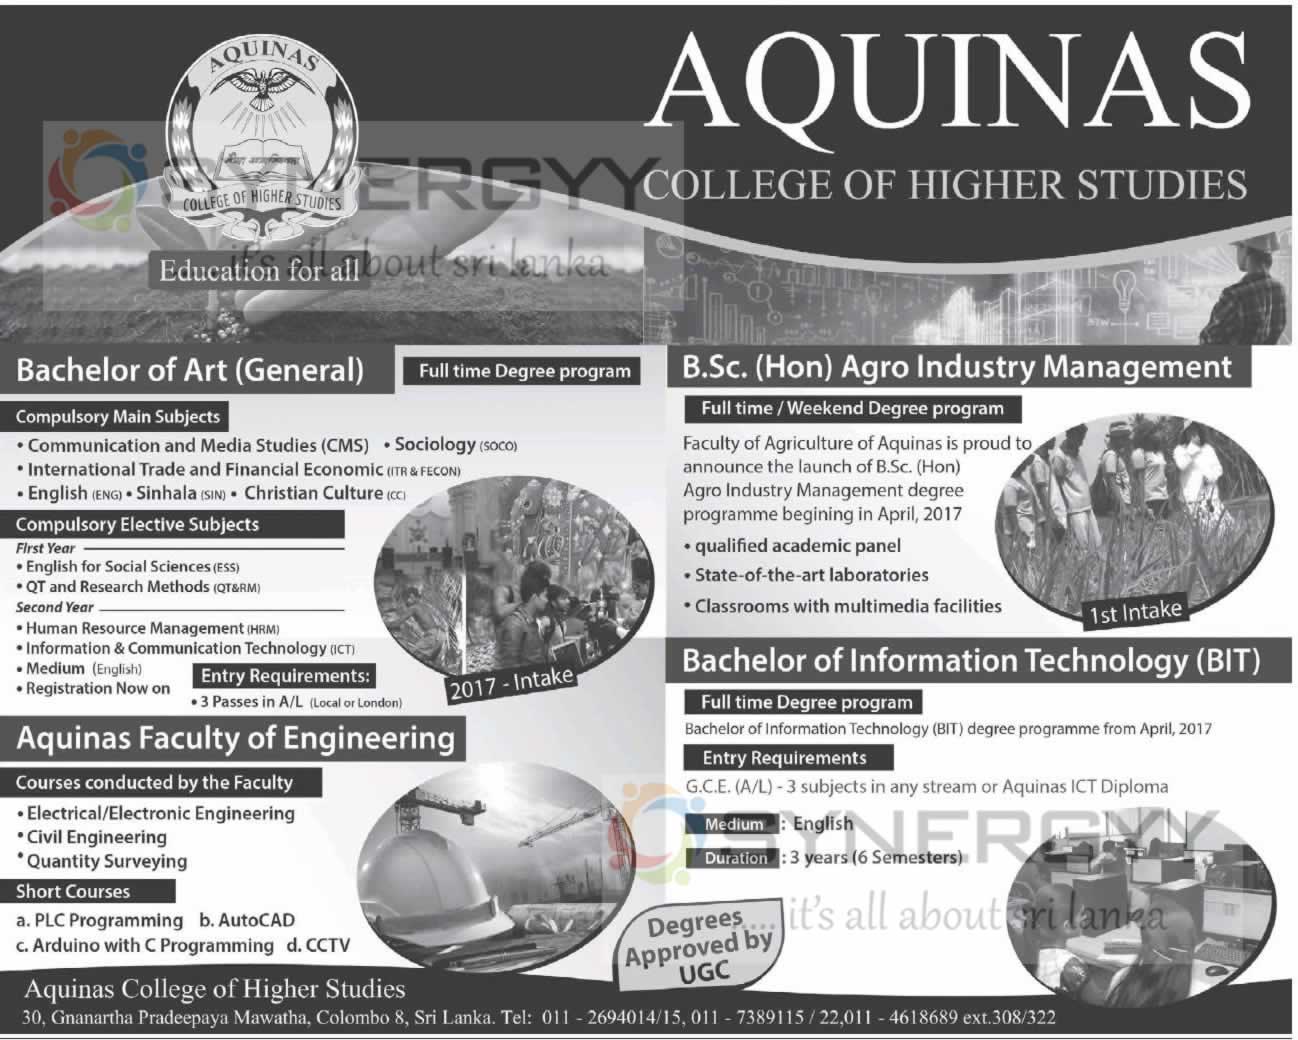 Aquinas College of Higher Studies – Degree Programme